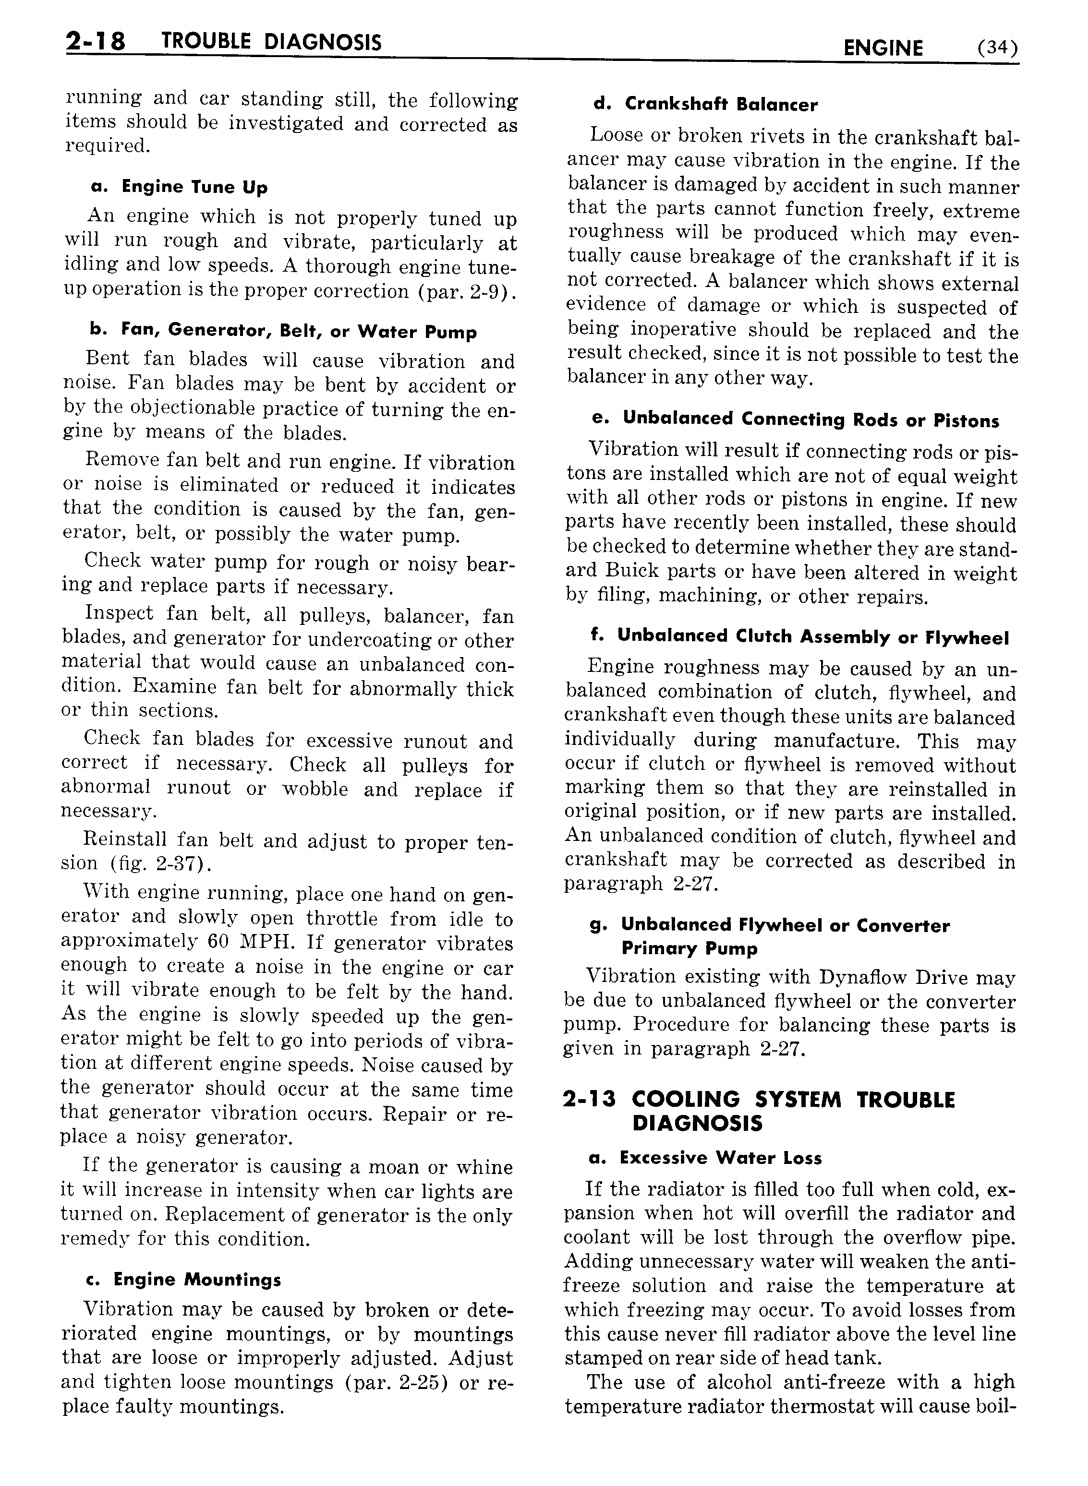 n_03 1954 Buick Shop Manual - Engine-018-018.jpg